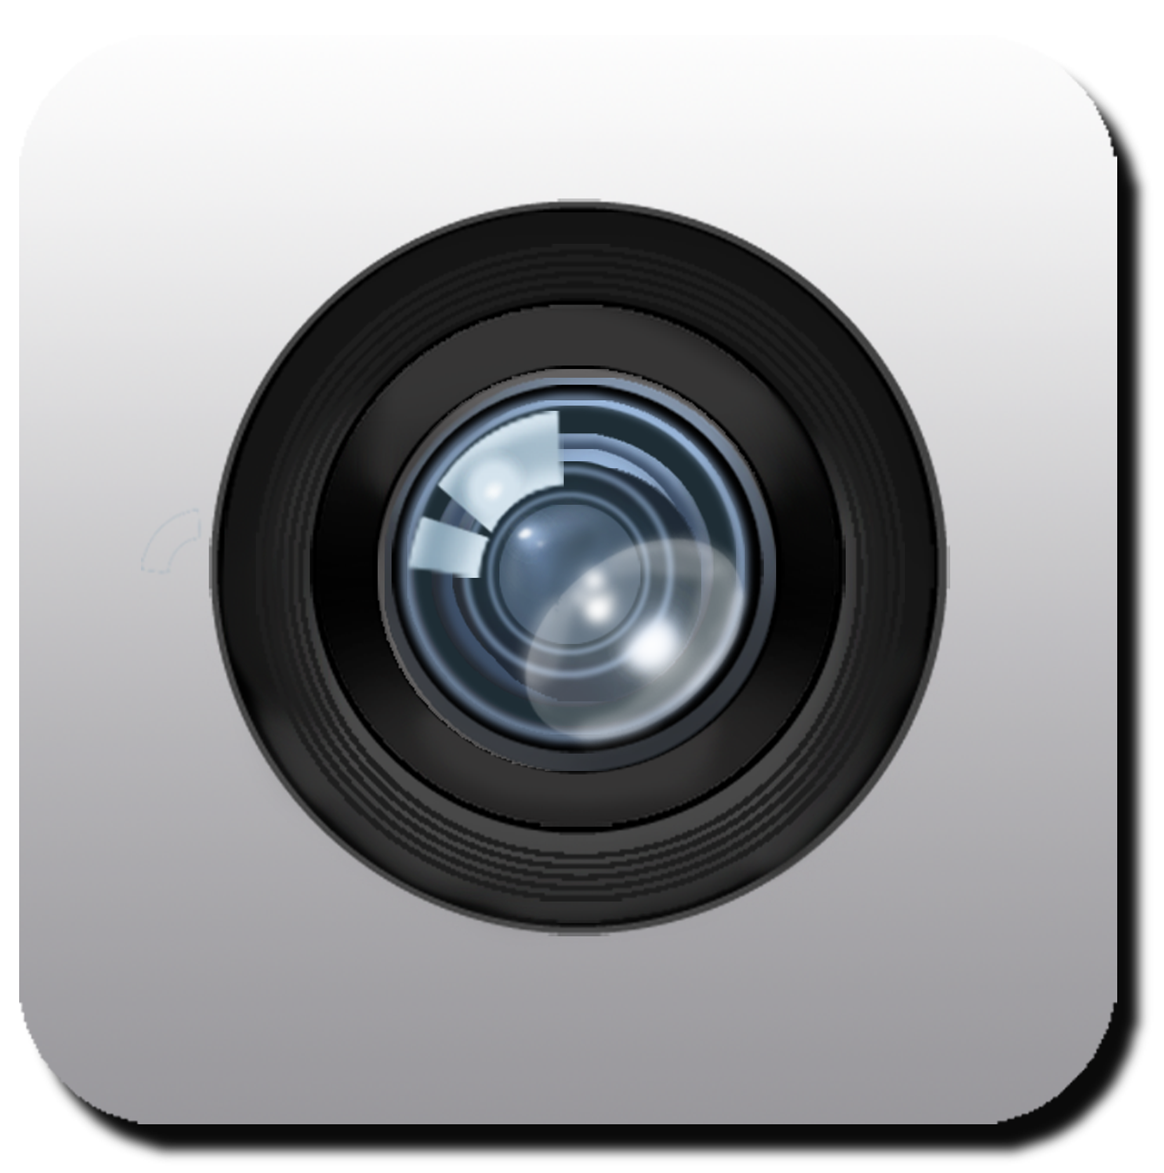 Camera Icon On iPhone